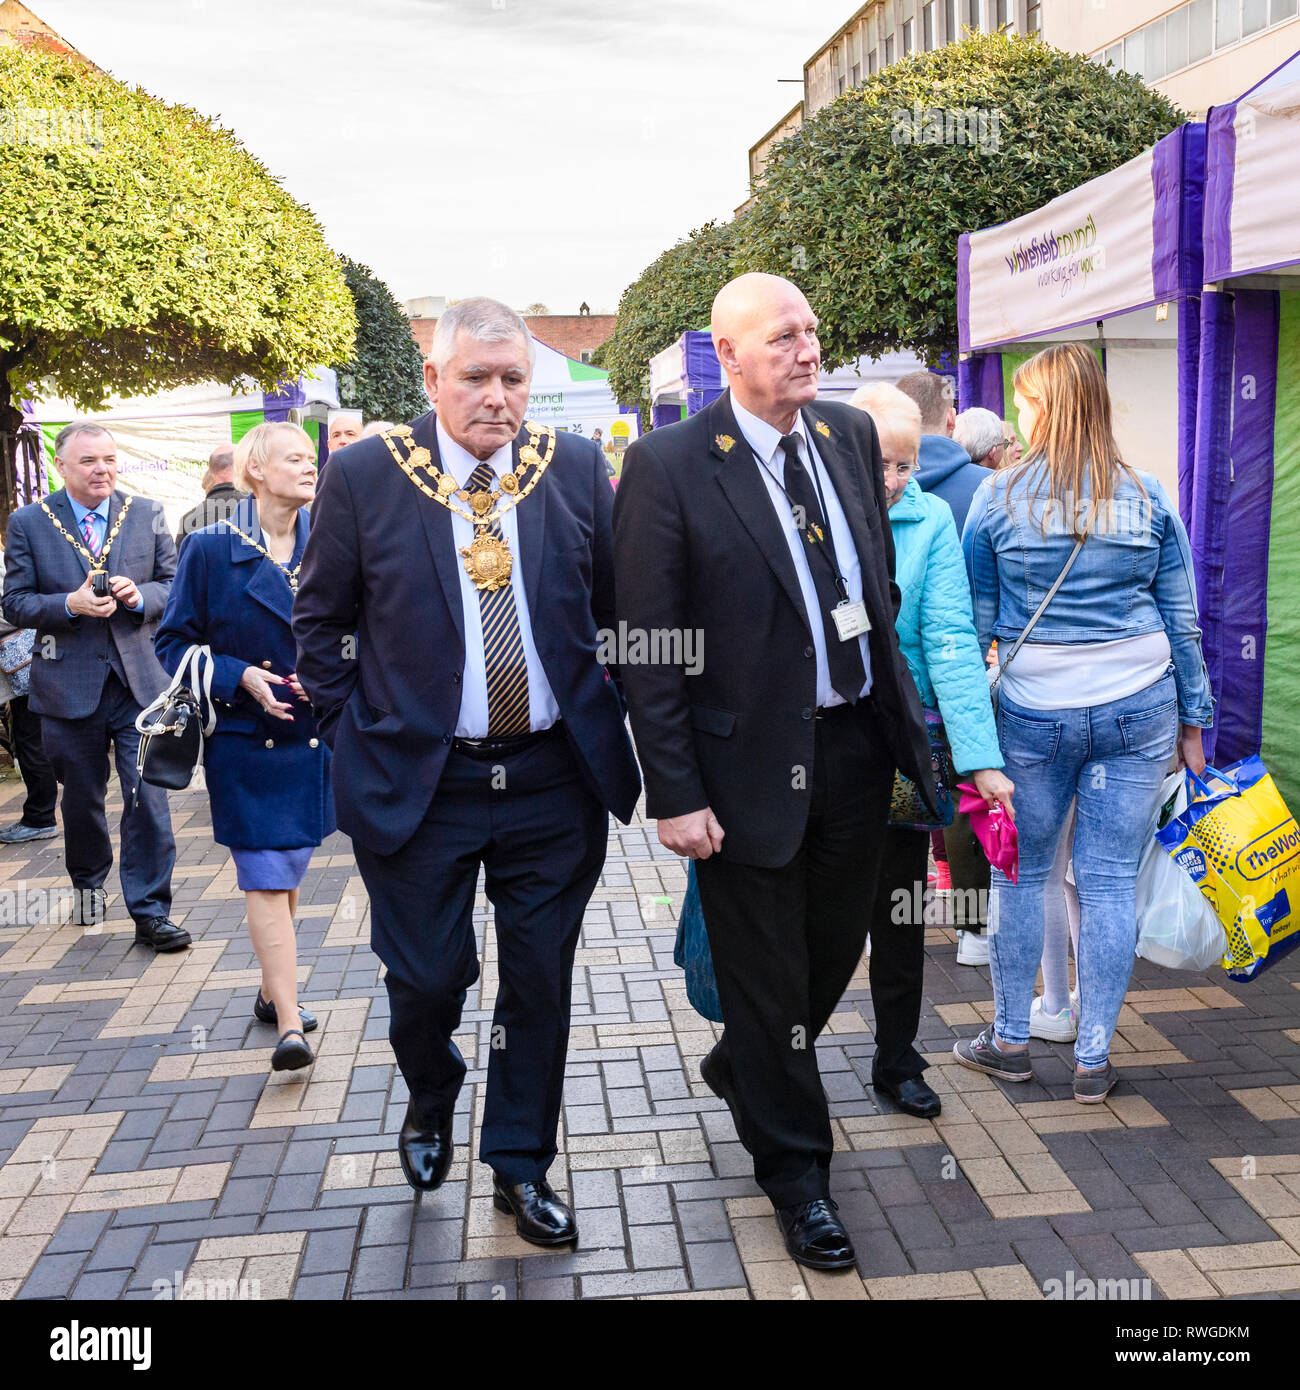 Maire de Wakefield et conseillers, visitent des stands à Wakefield Food, Drink & Rhubarb Festival 2019 par Cathedral - West Yorkshire, Angleterre, Royaume-Uni. Banque D'Images